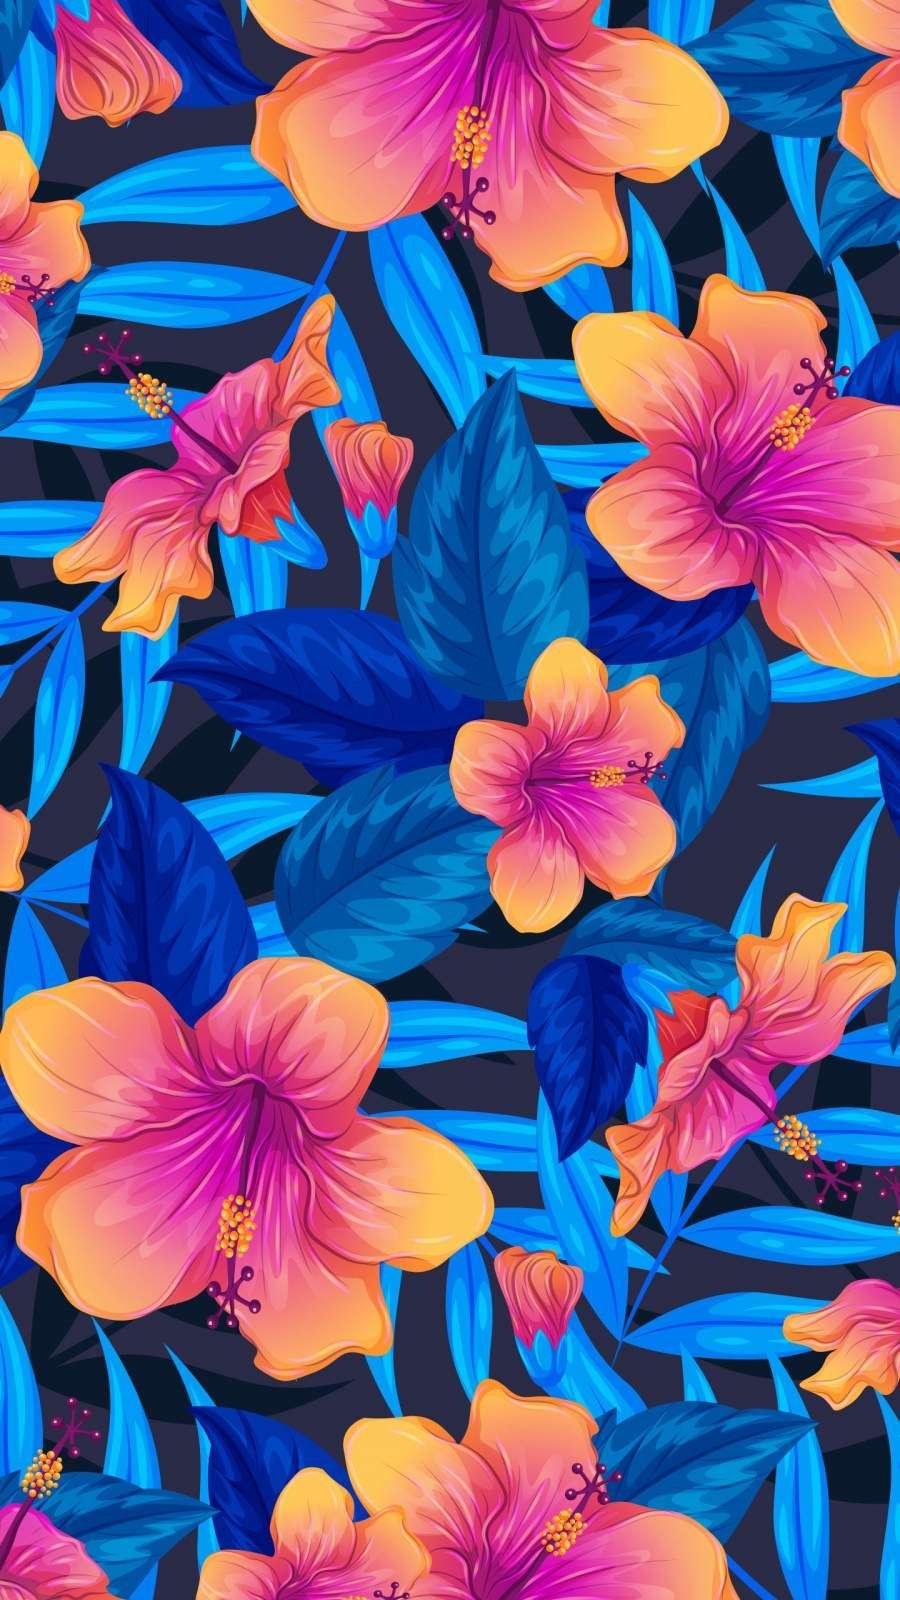 Colorful Flowers Art iPhone Wallpaper. Flower iphone wallpaper, Flower wallpaper, Flower phone wallpaper